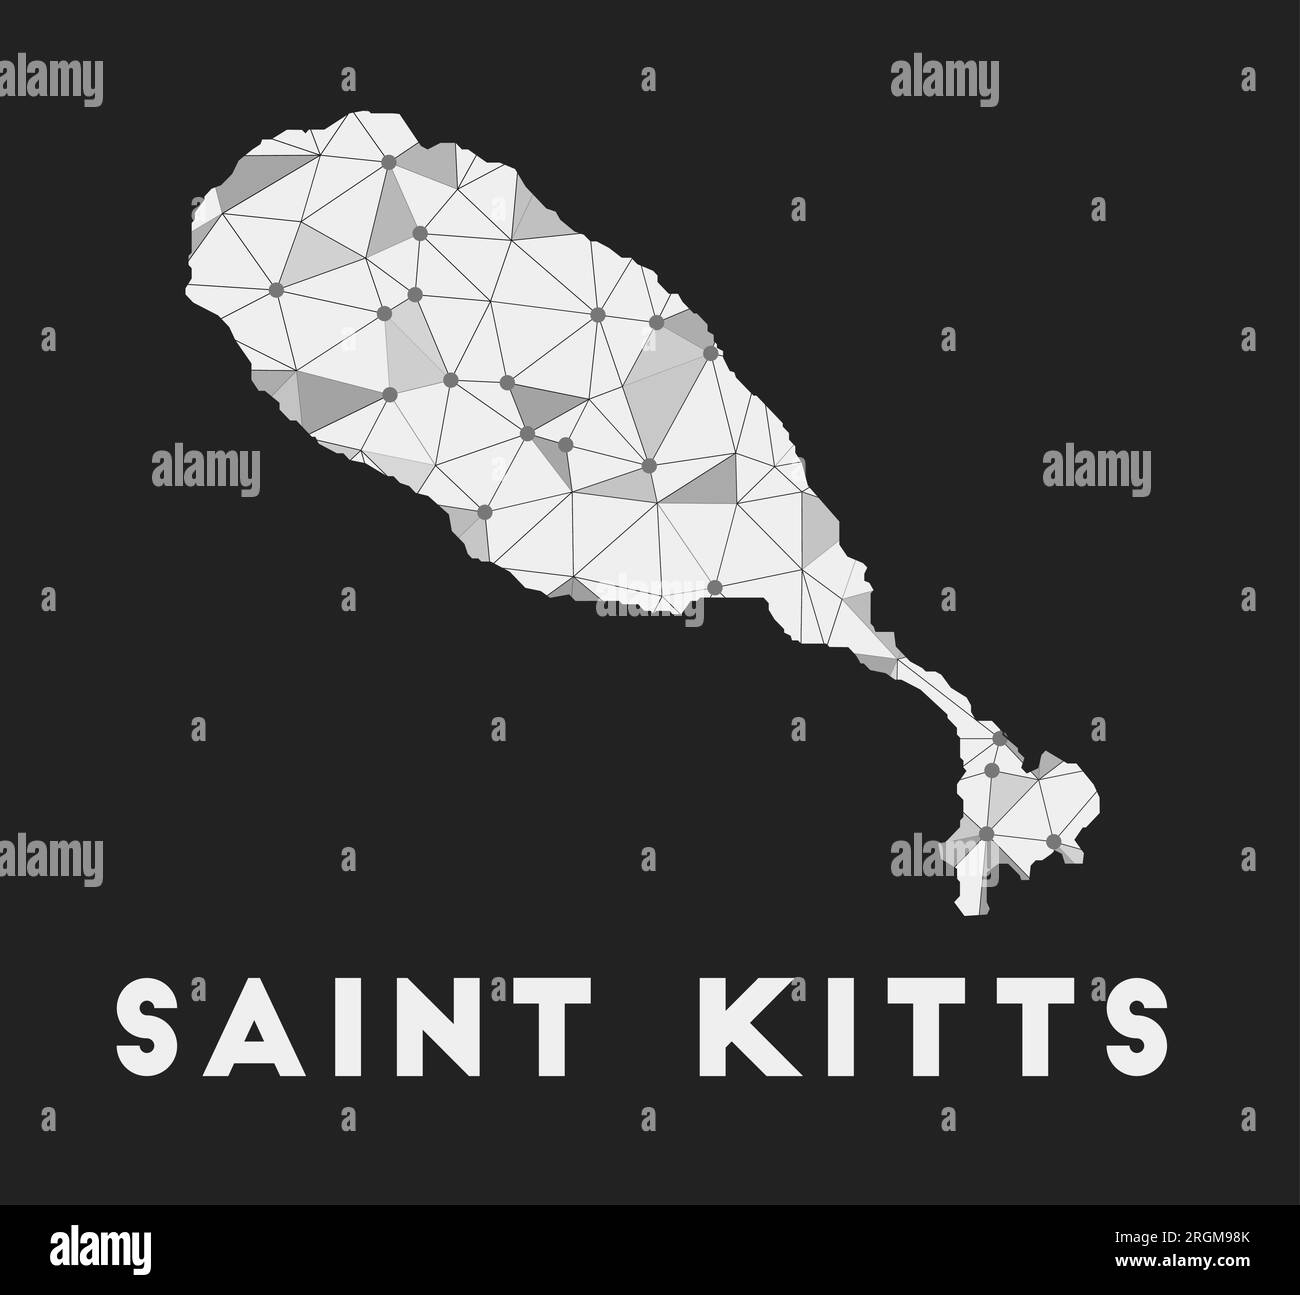 Saint Kitts - communication network map of island. Saint Kitts trendy geometric design on dark background. Technology, internet, network, telecommunic Stock Vector